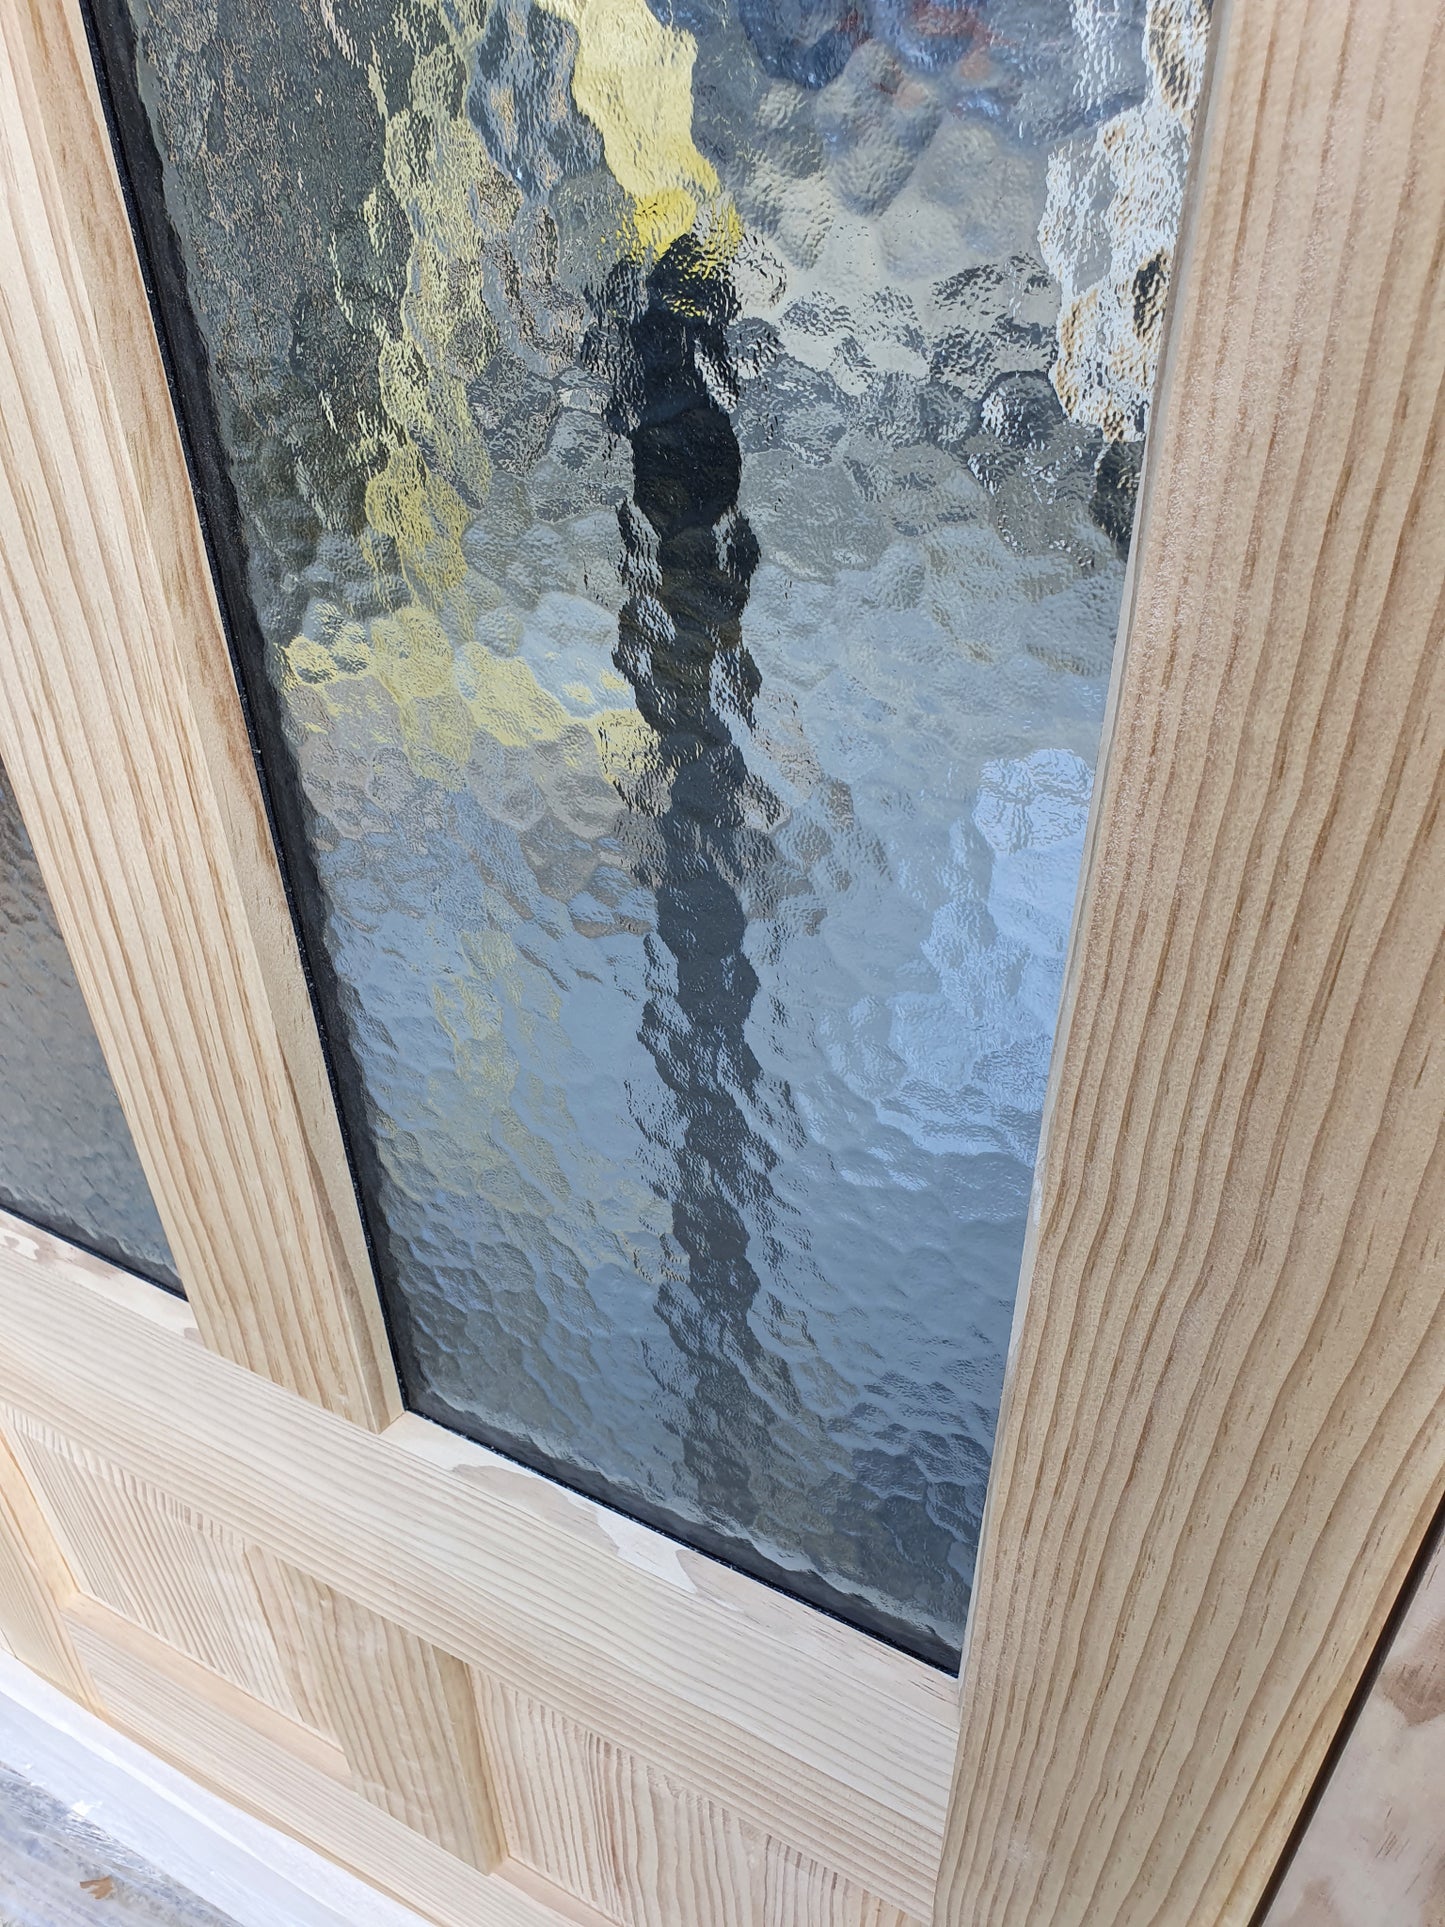 BRAND NEW Double Glazed Wooden Entranceway 2045 H x 1800 W #DG036